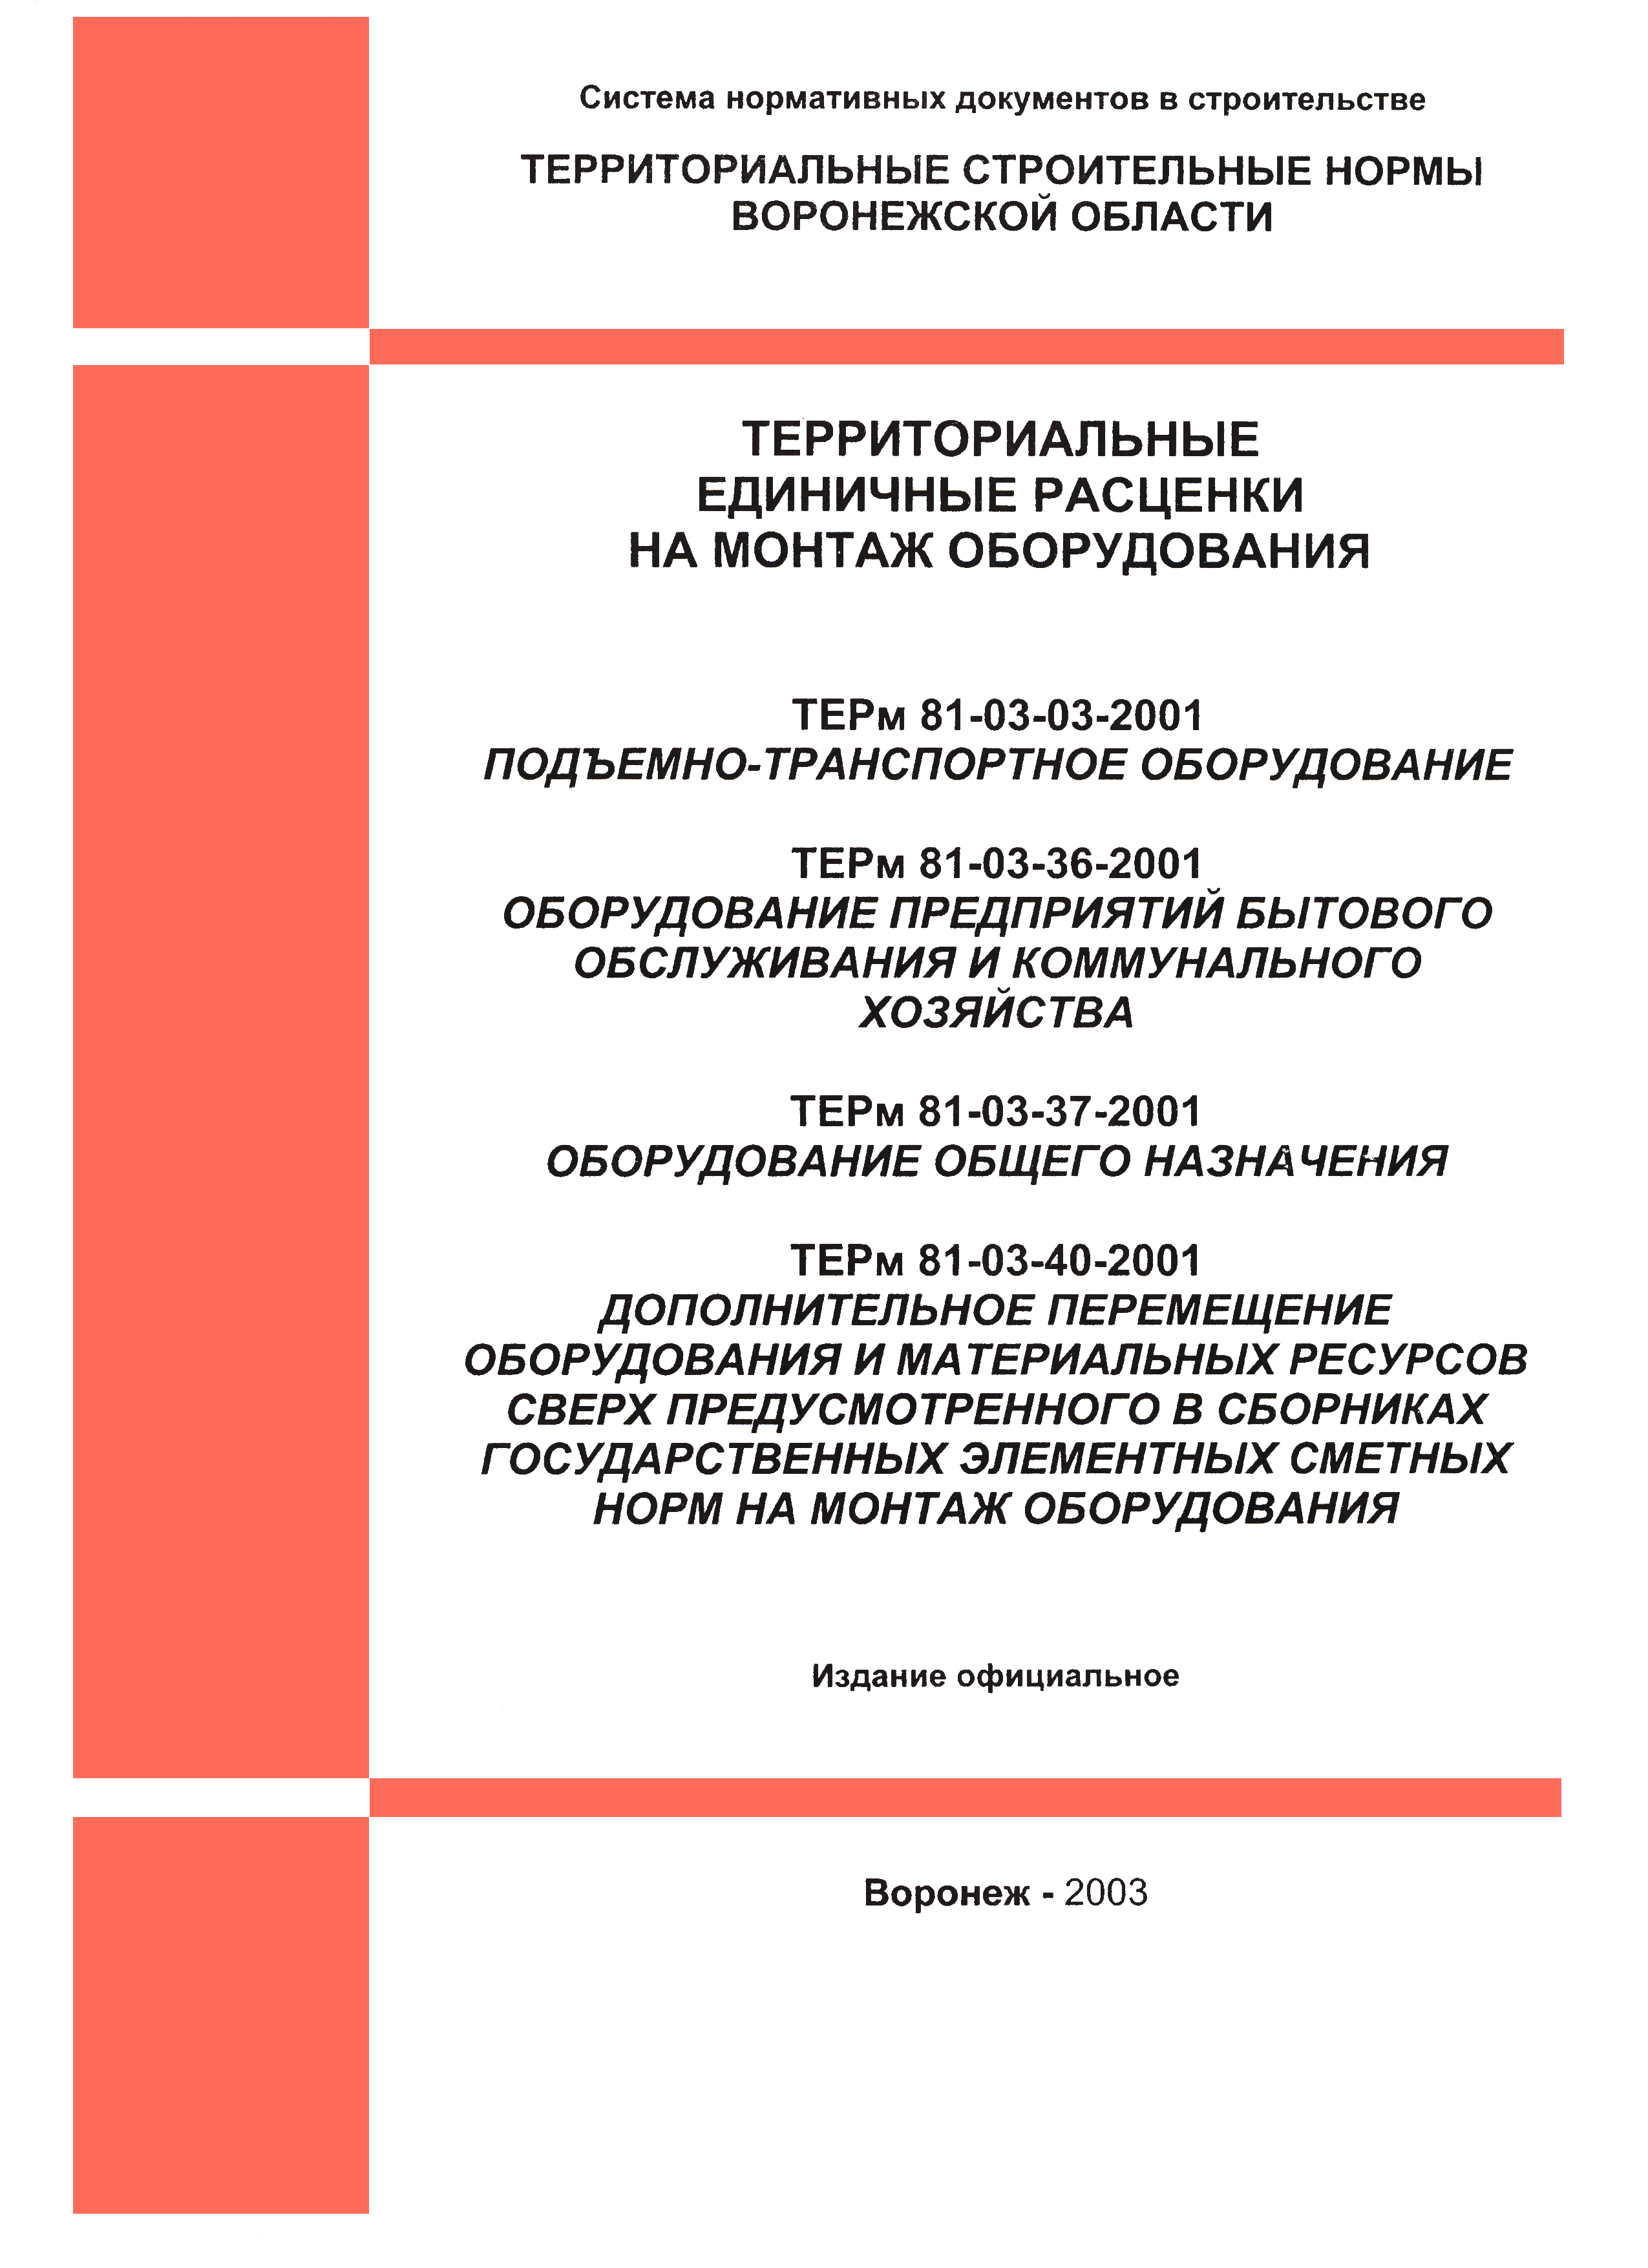 ТЕРм Воронежской области 81-03-03-2001